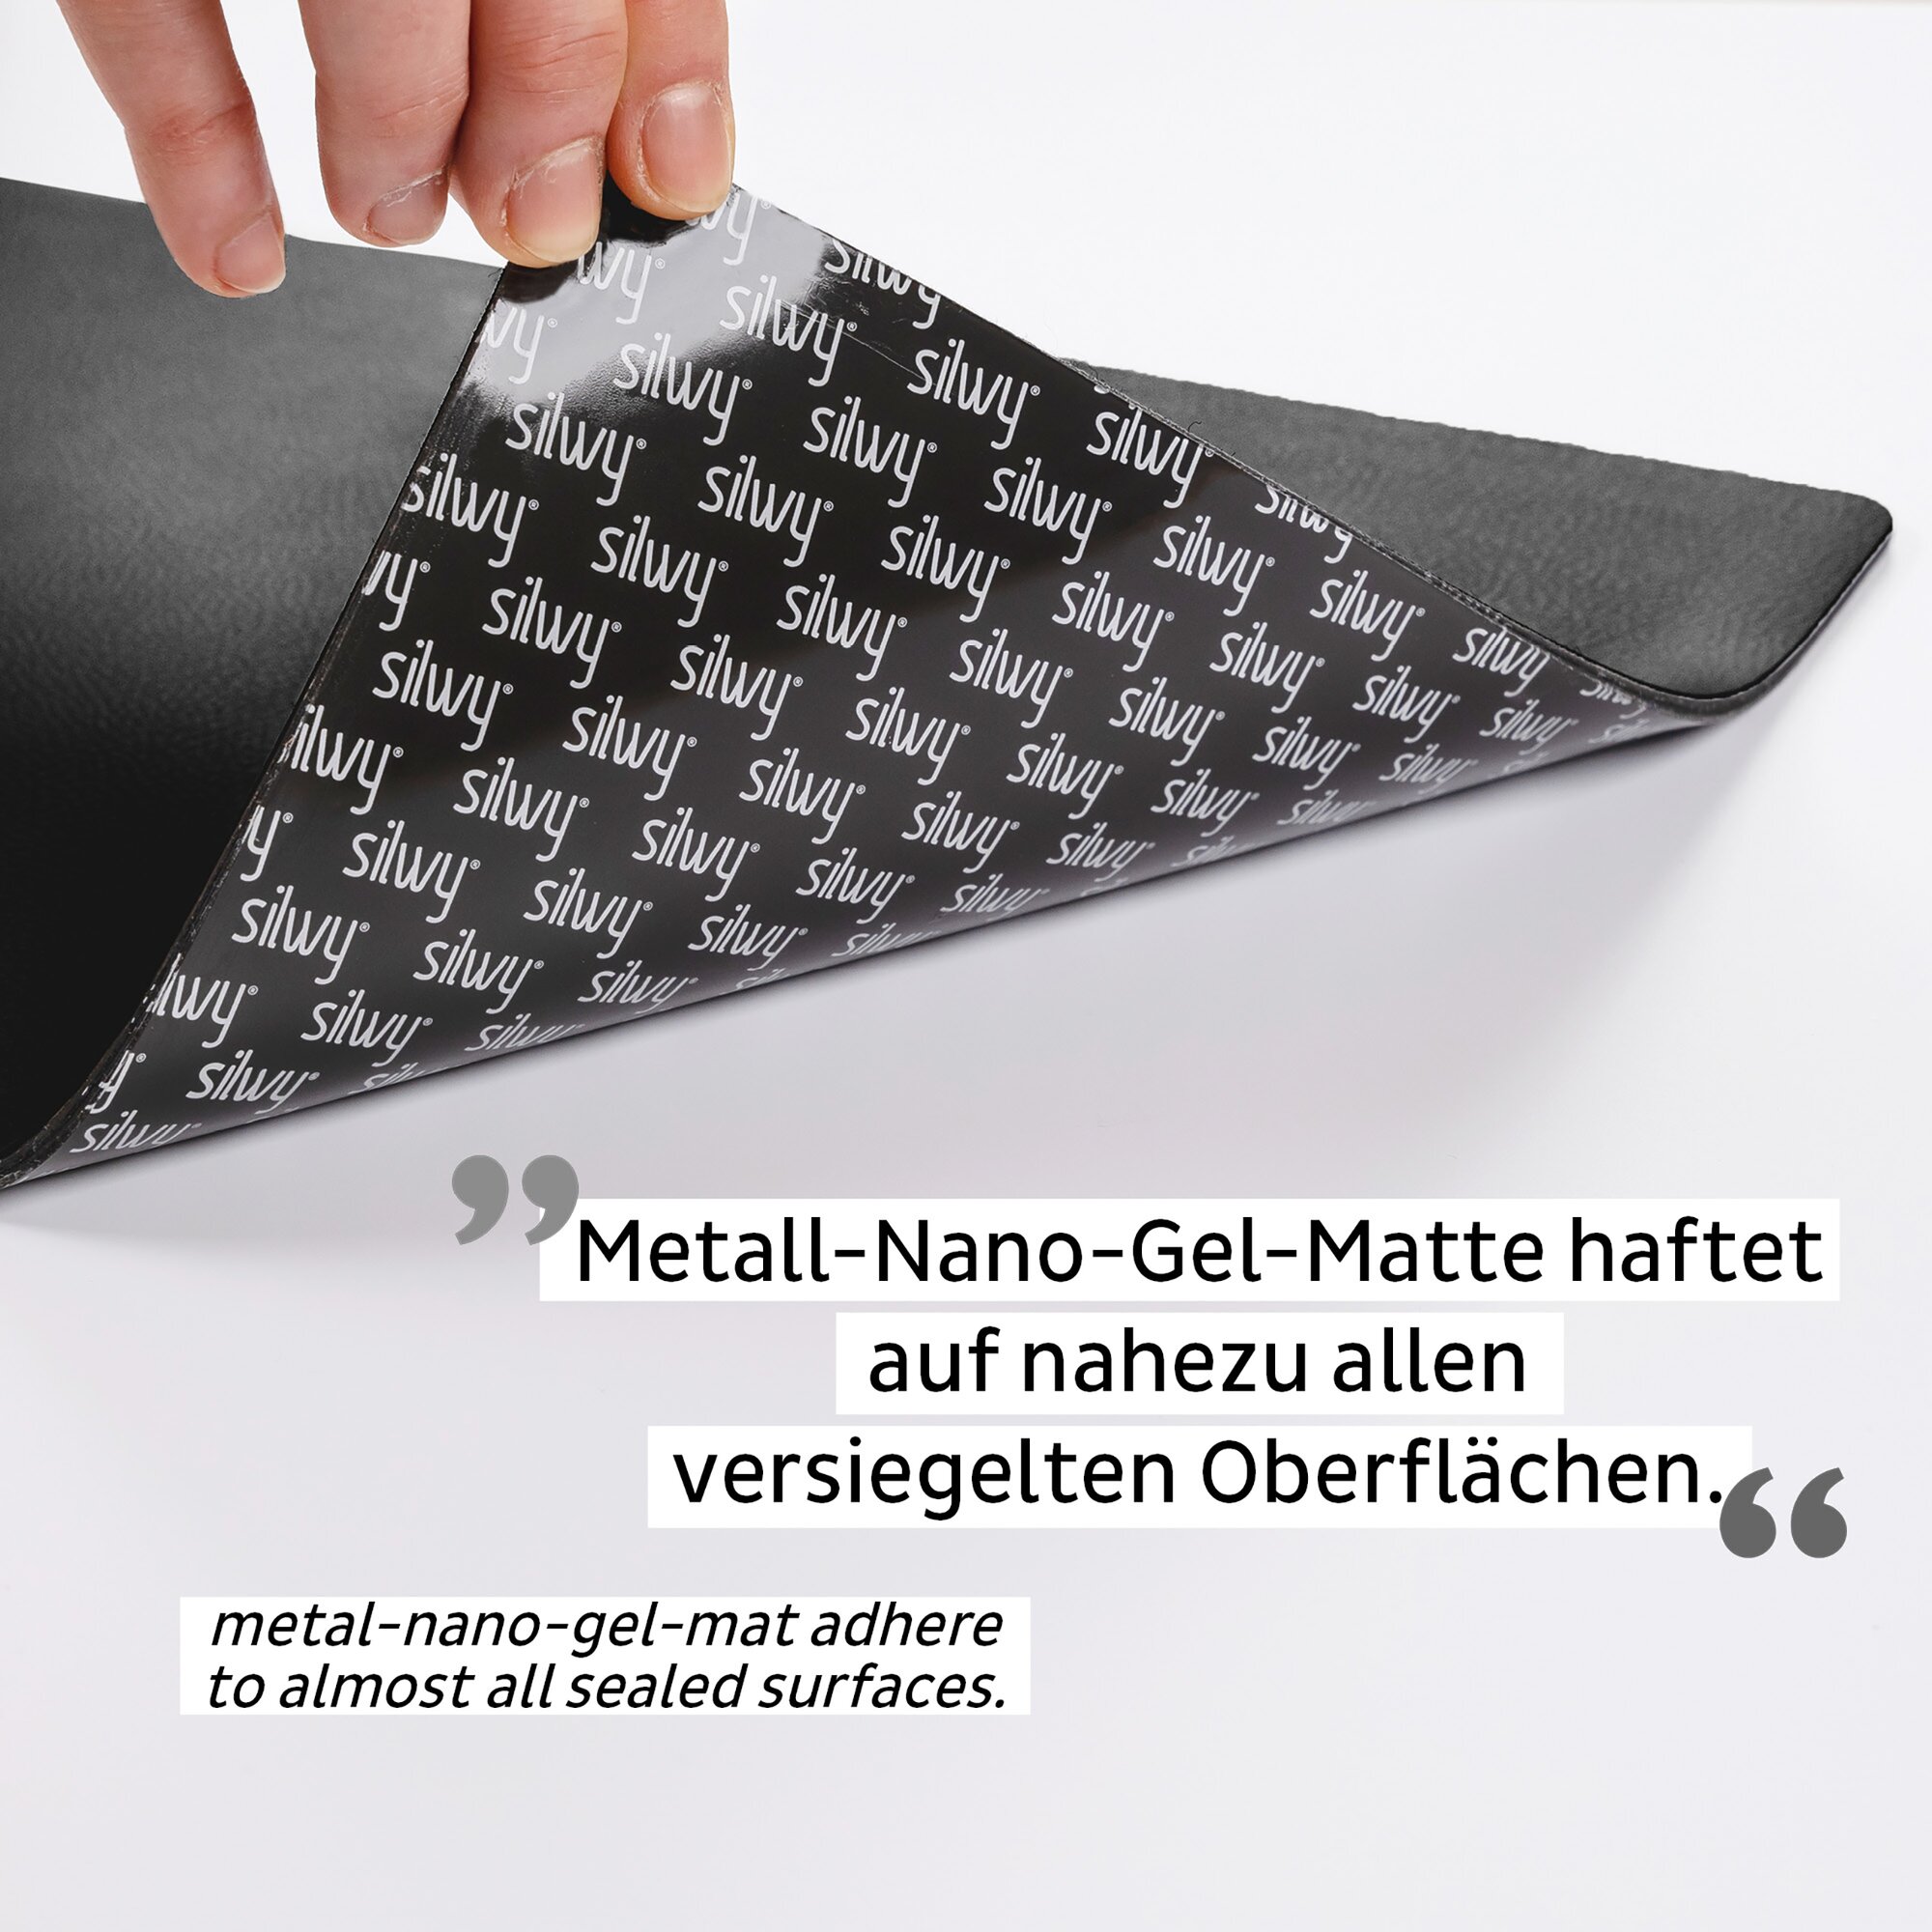 Metall-Nano-Gel-Matte